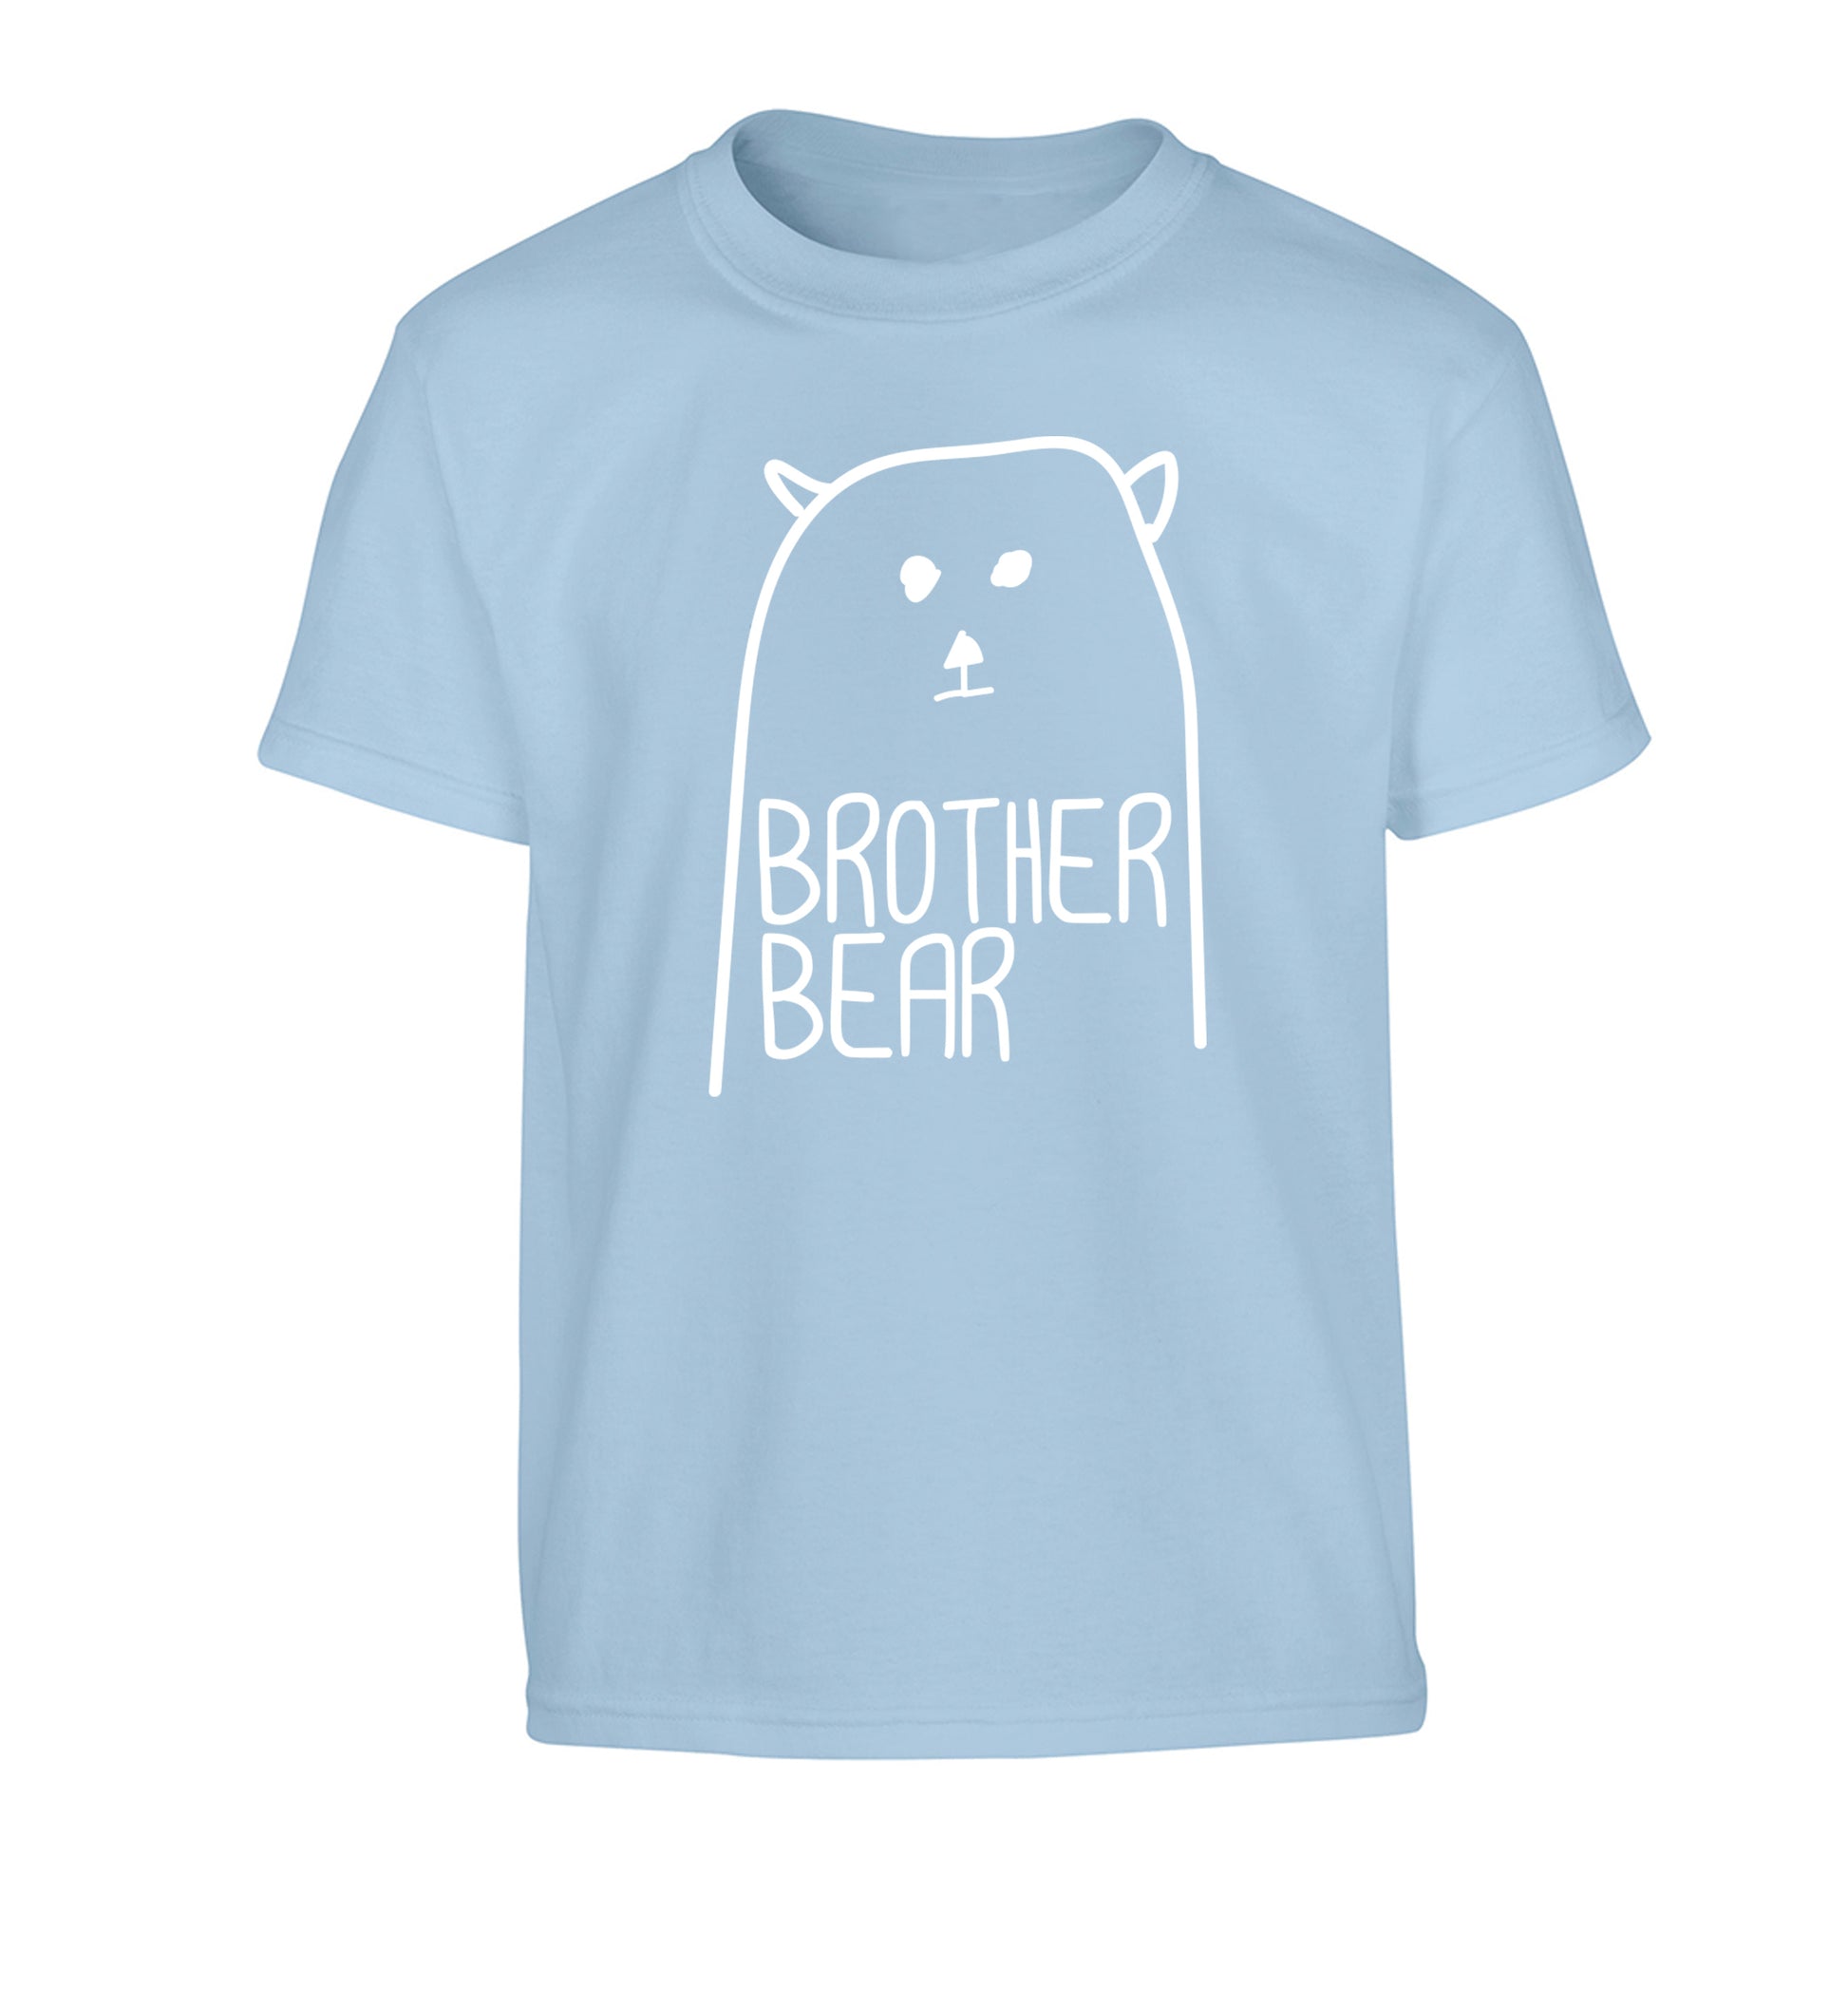 Brother bear Children's light blue Tshirt 12-13 Years